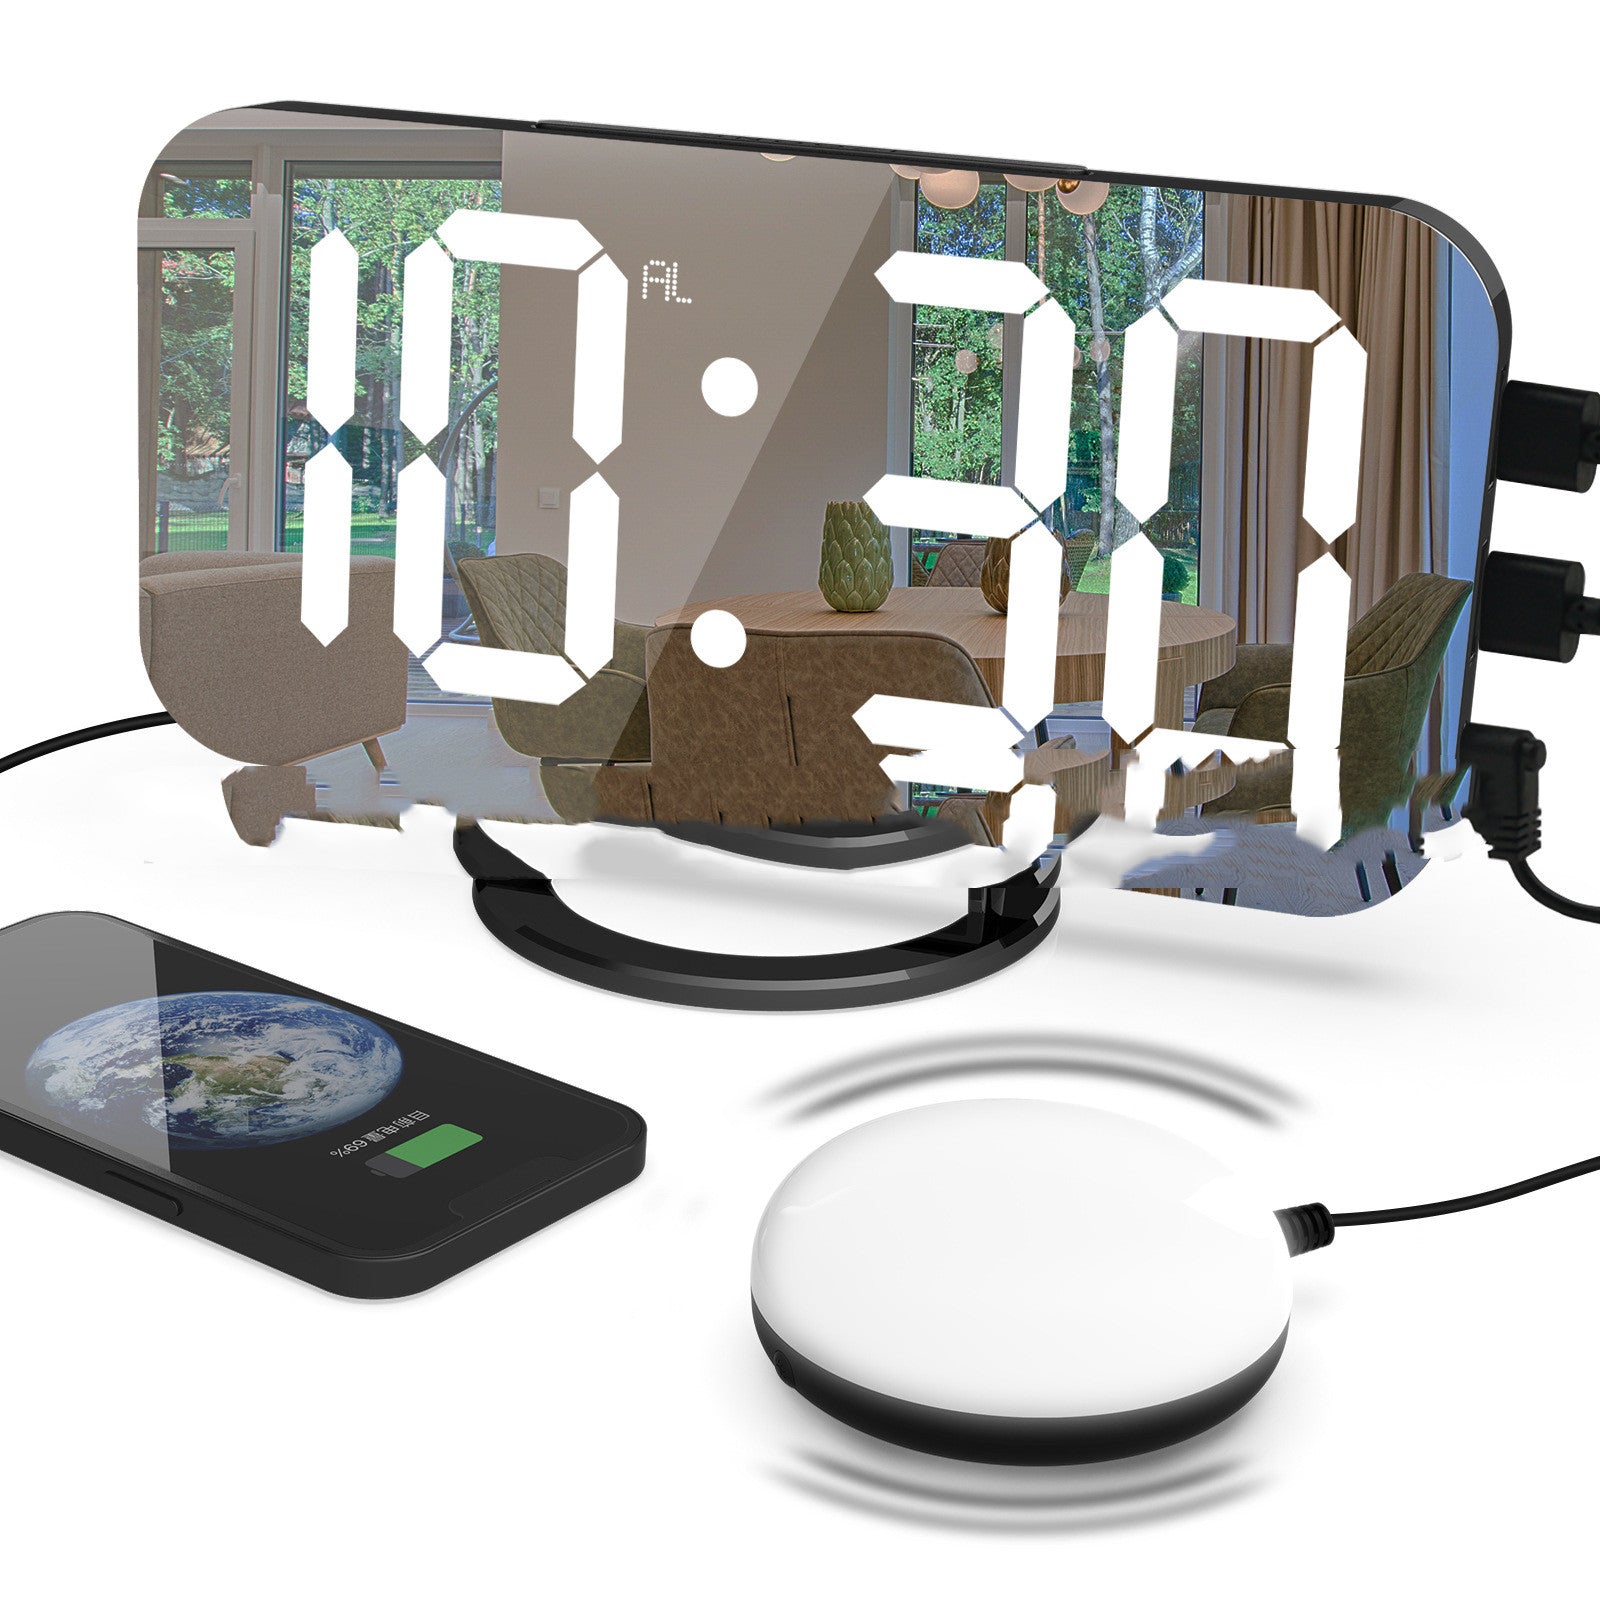 Digital Mirror Clock Dual USB Brightness Adjustable LED Display Table Alarm Dual USB Snooze Time Display For Home Office Bedroom - GALAXY PORTAL